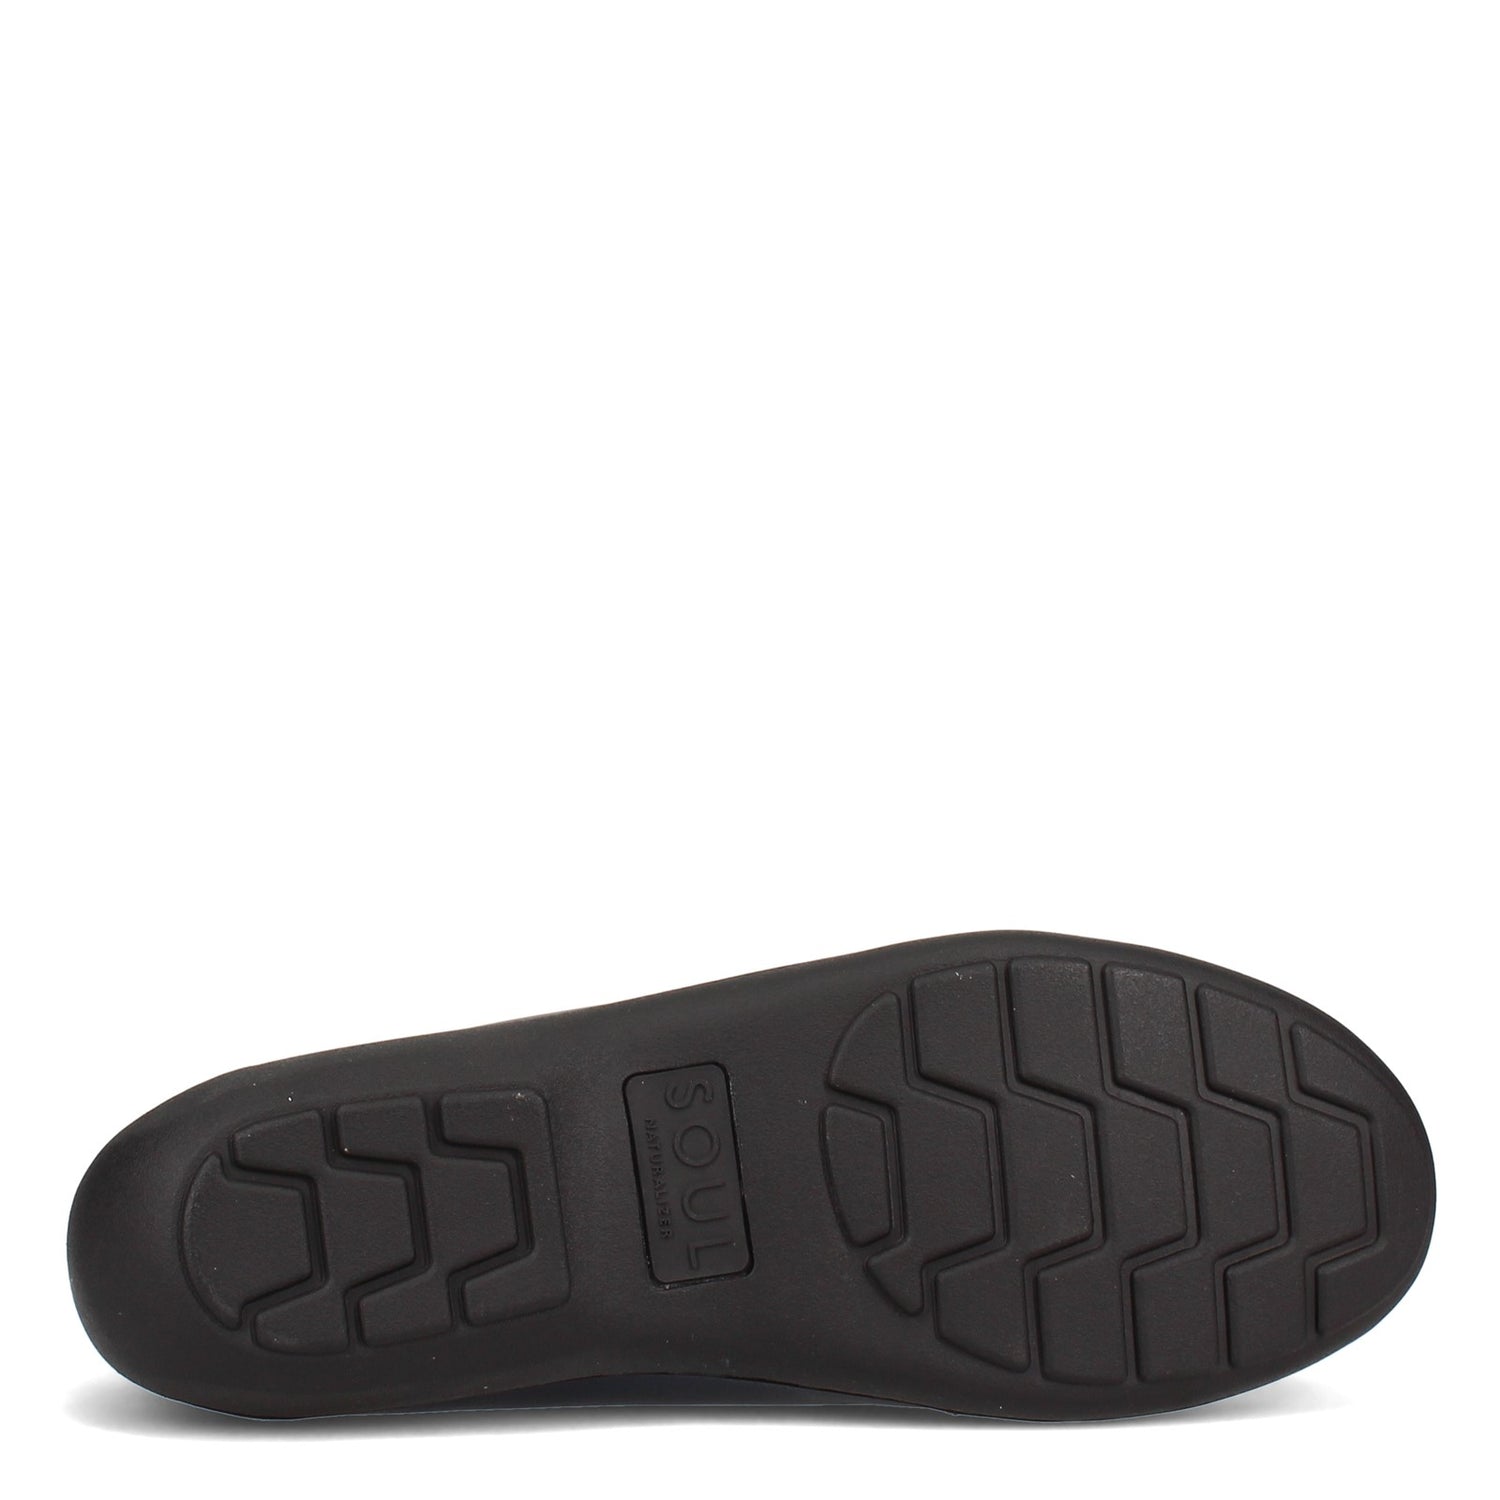 Soul Naturalizer women's Slip On Flat Casual Shoes Kemper 2 Size 9.5M Black